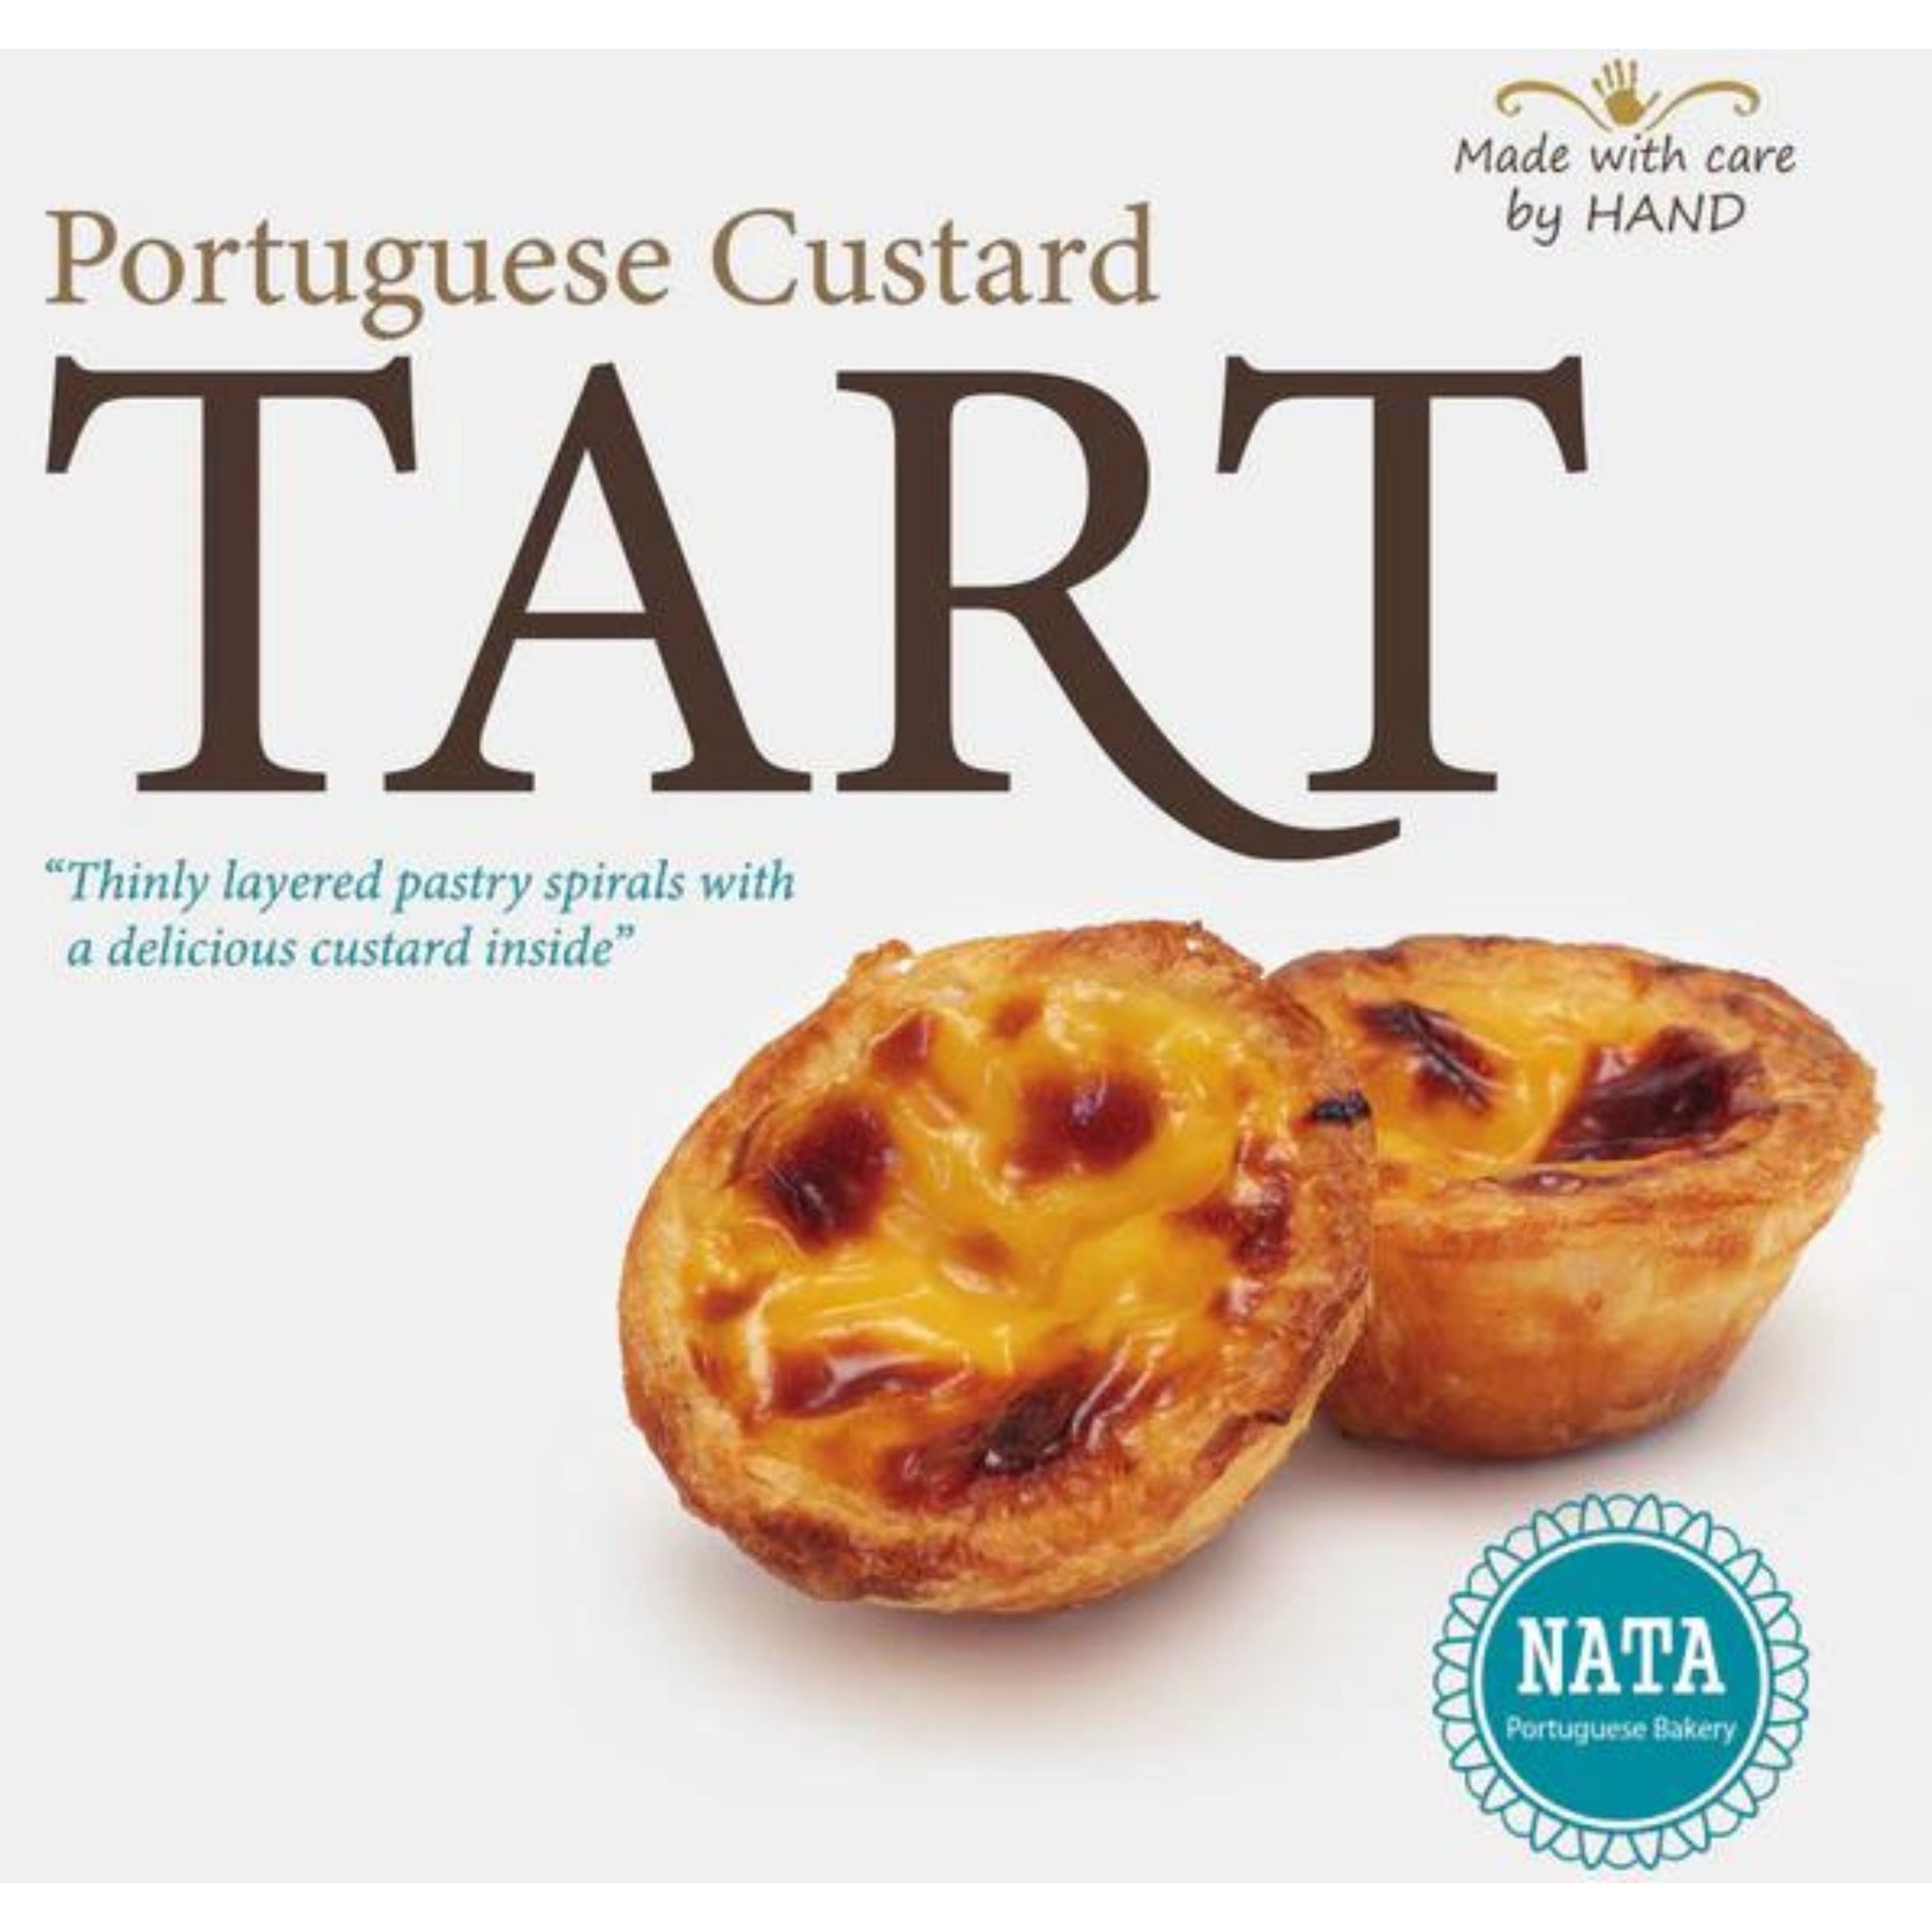 Portuguese Tarts